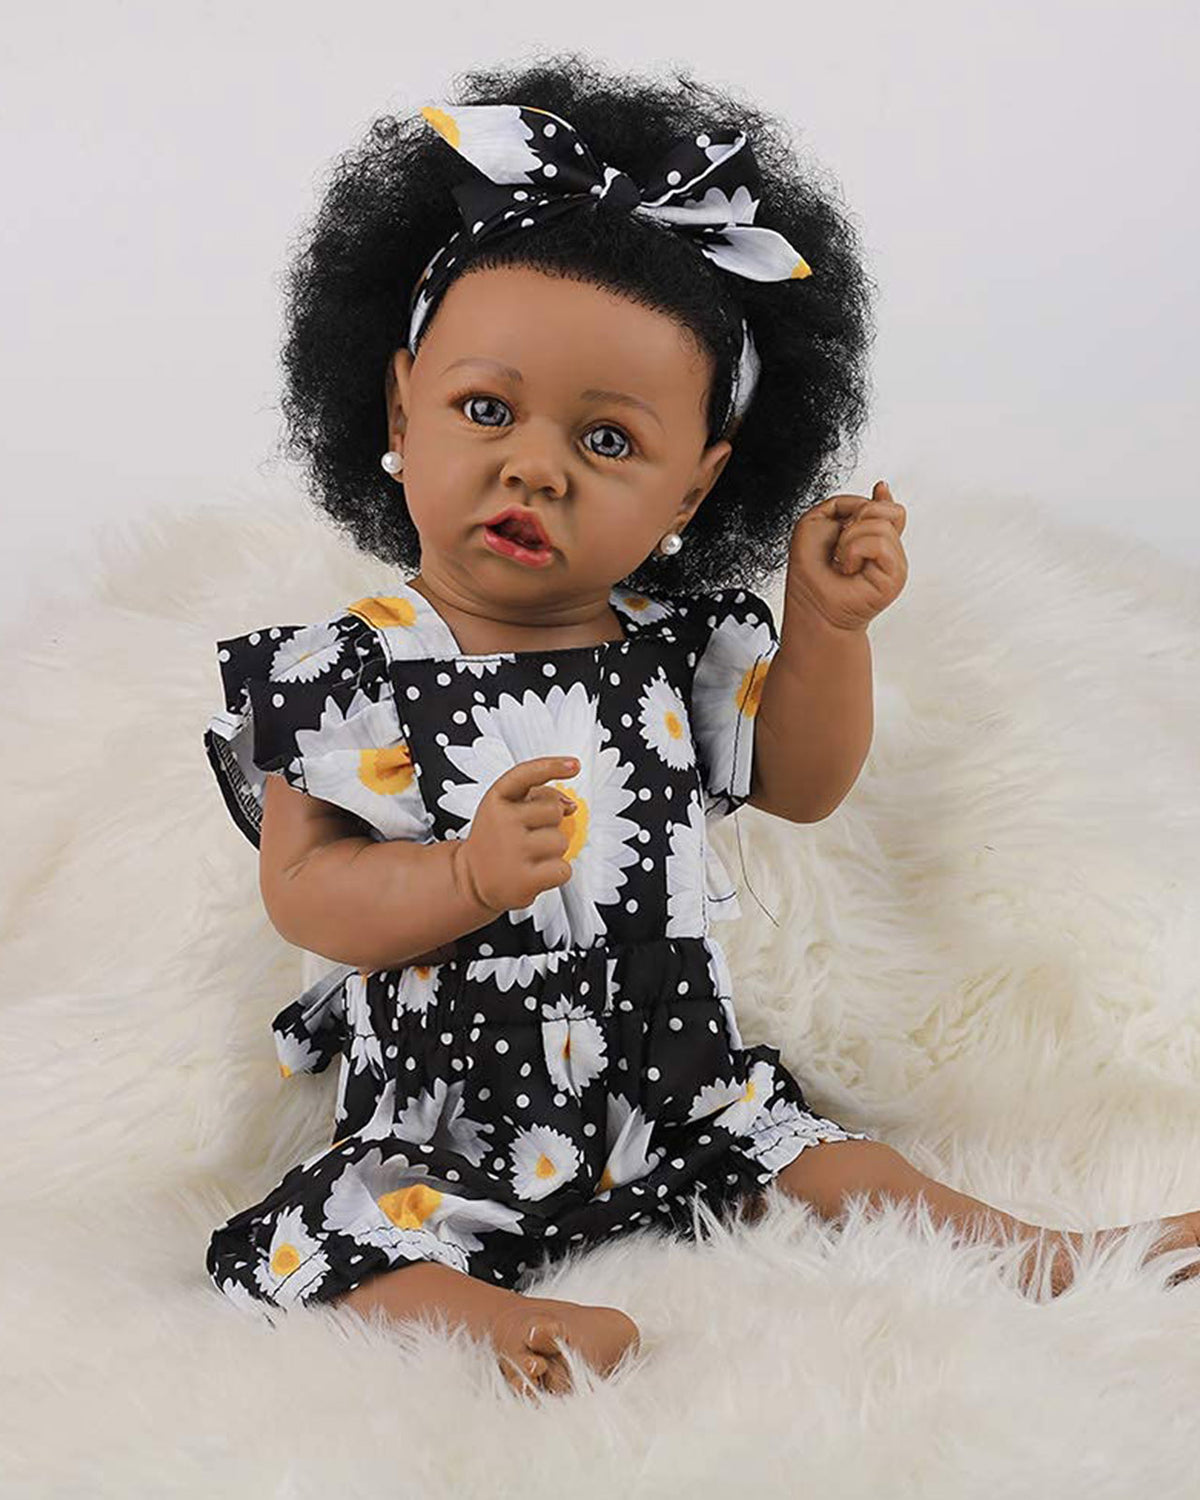 Irma - 20" Reborn Baby Dolls Cute African American Newborn Girl with Soft Body